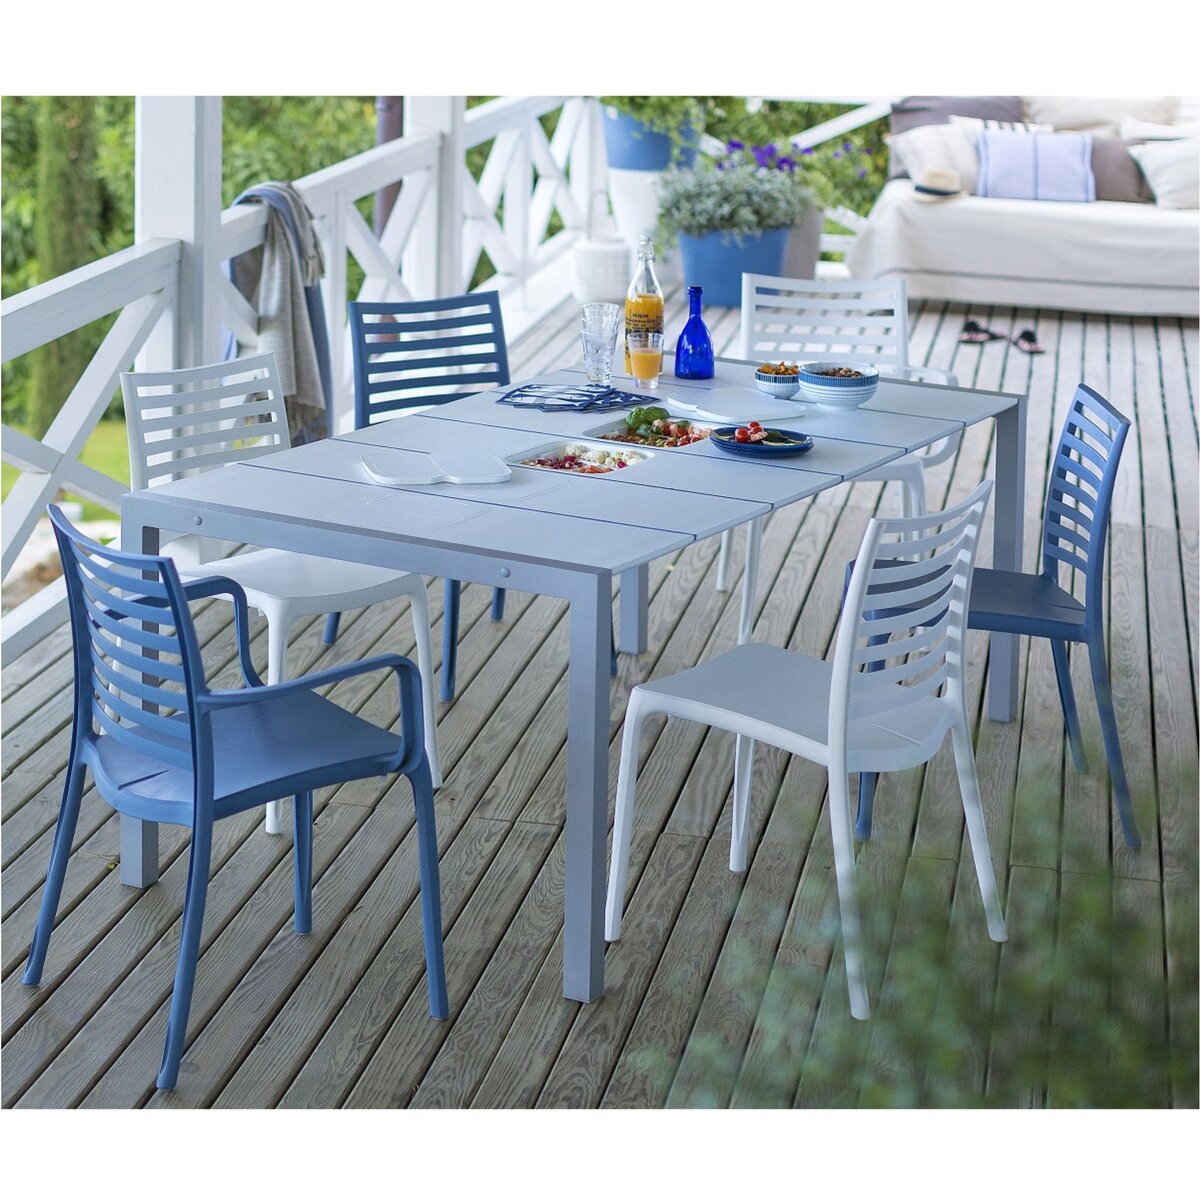 GROSFILLEX Table de jardin 190x100x74cm résine blanc bleu SUNDAY